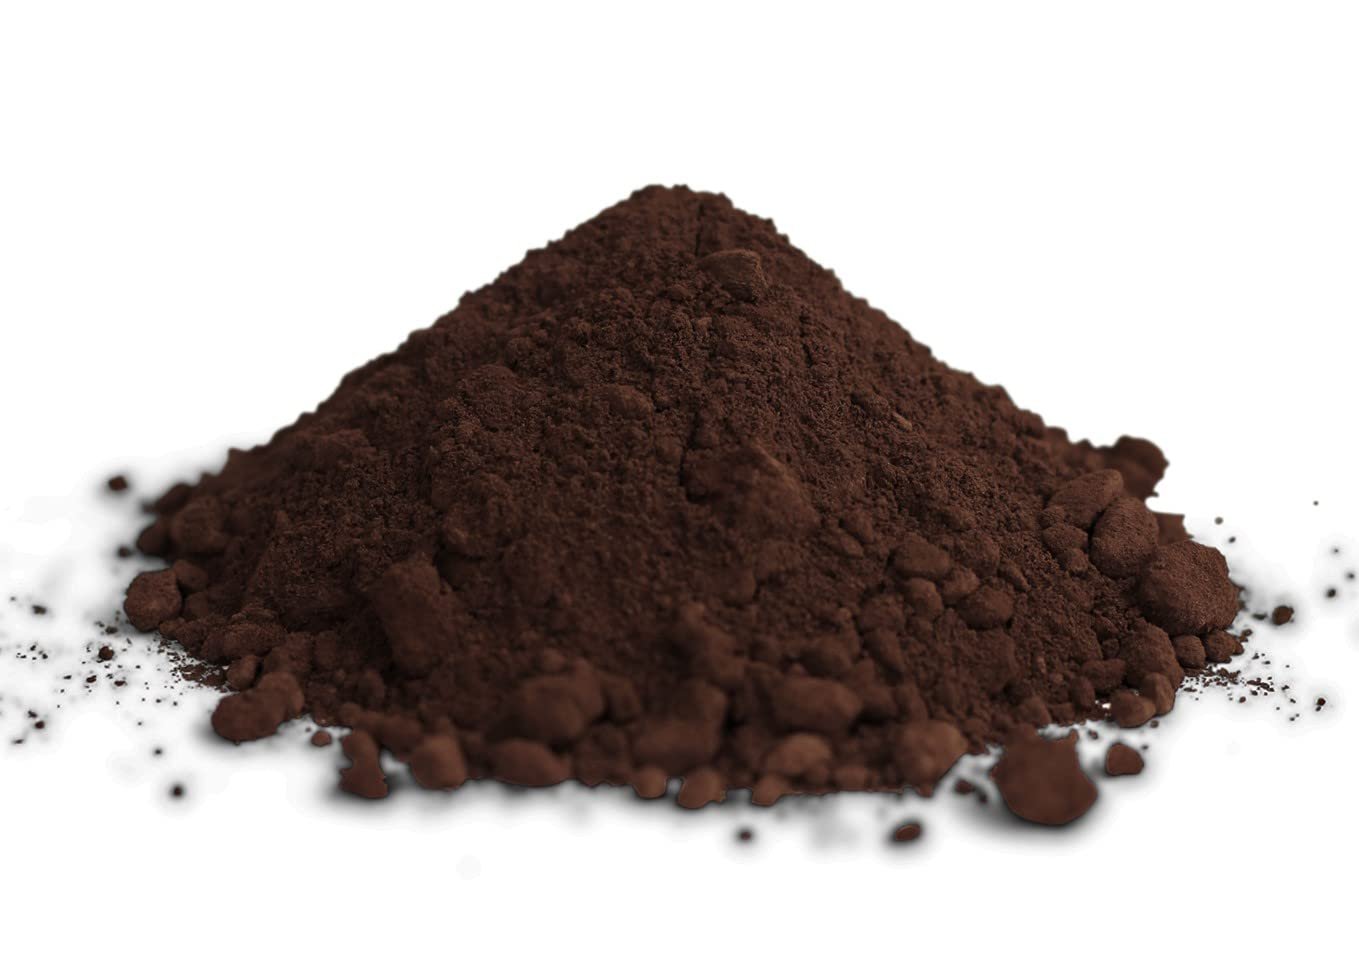 Organic Black Cocoa Powder: Unsweetened & Dutch Processed